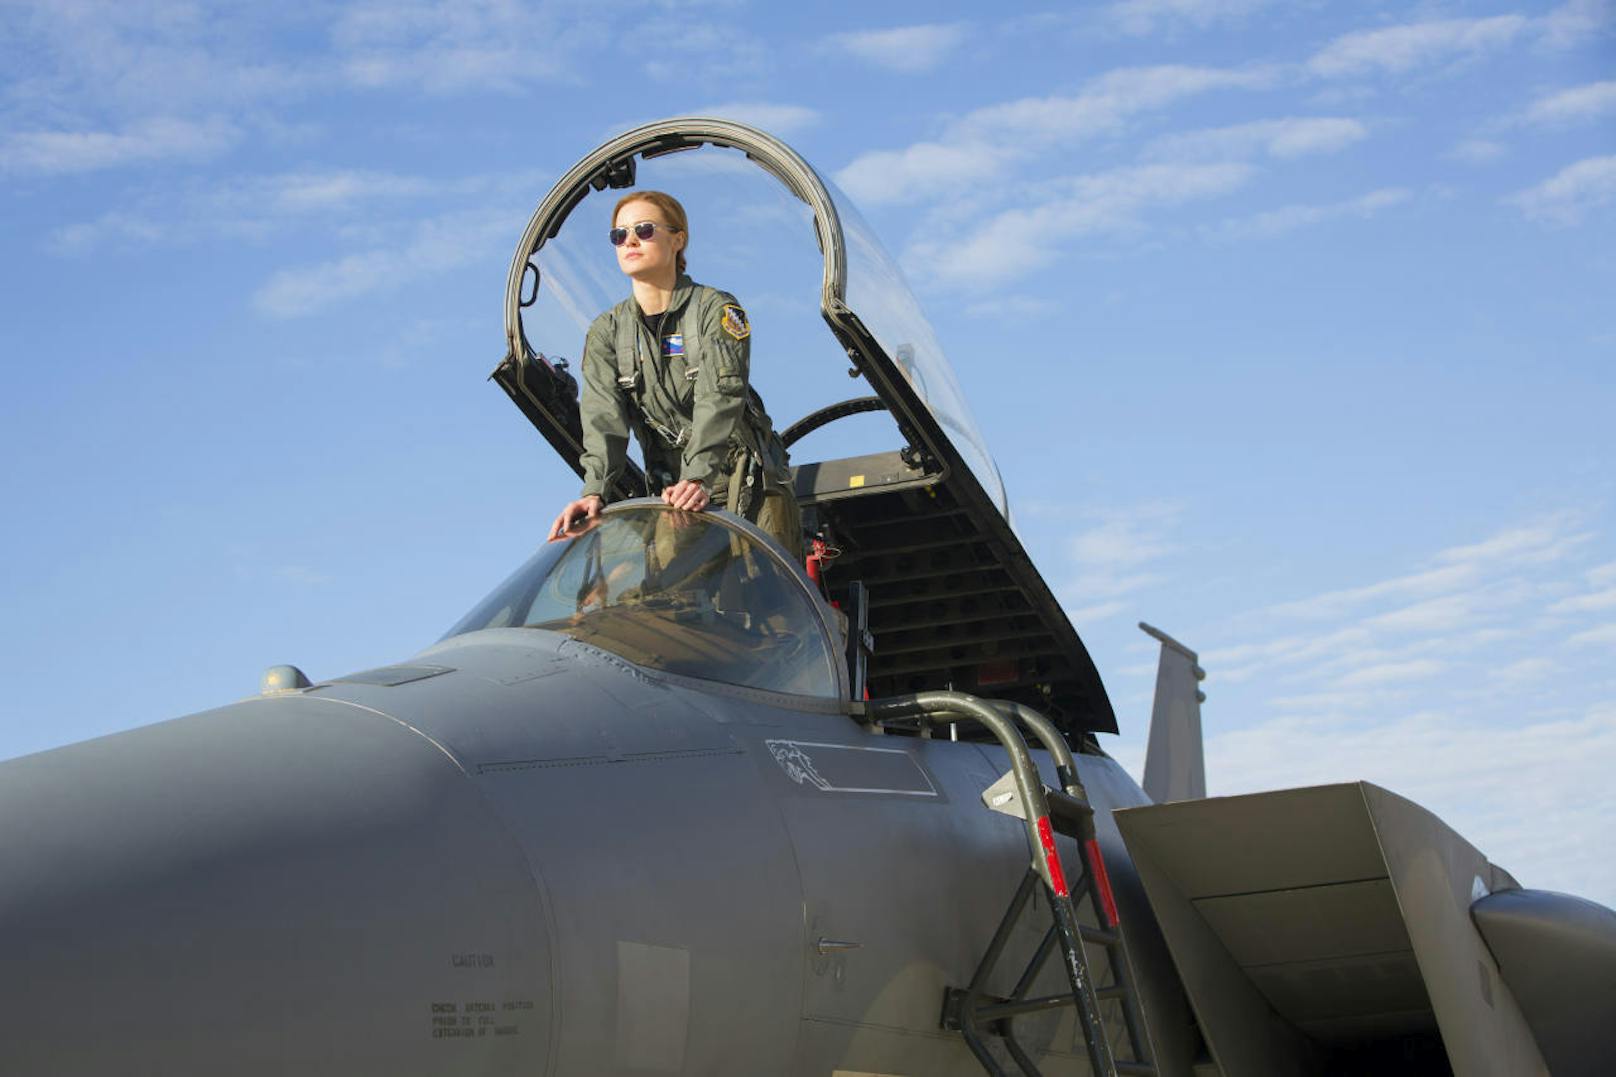 Carol Danvers/Captain Marvel (Brie Larson) in "Captain Marvel"